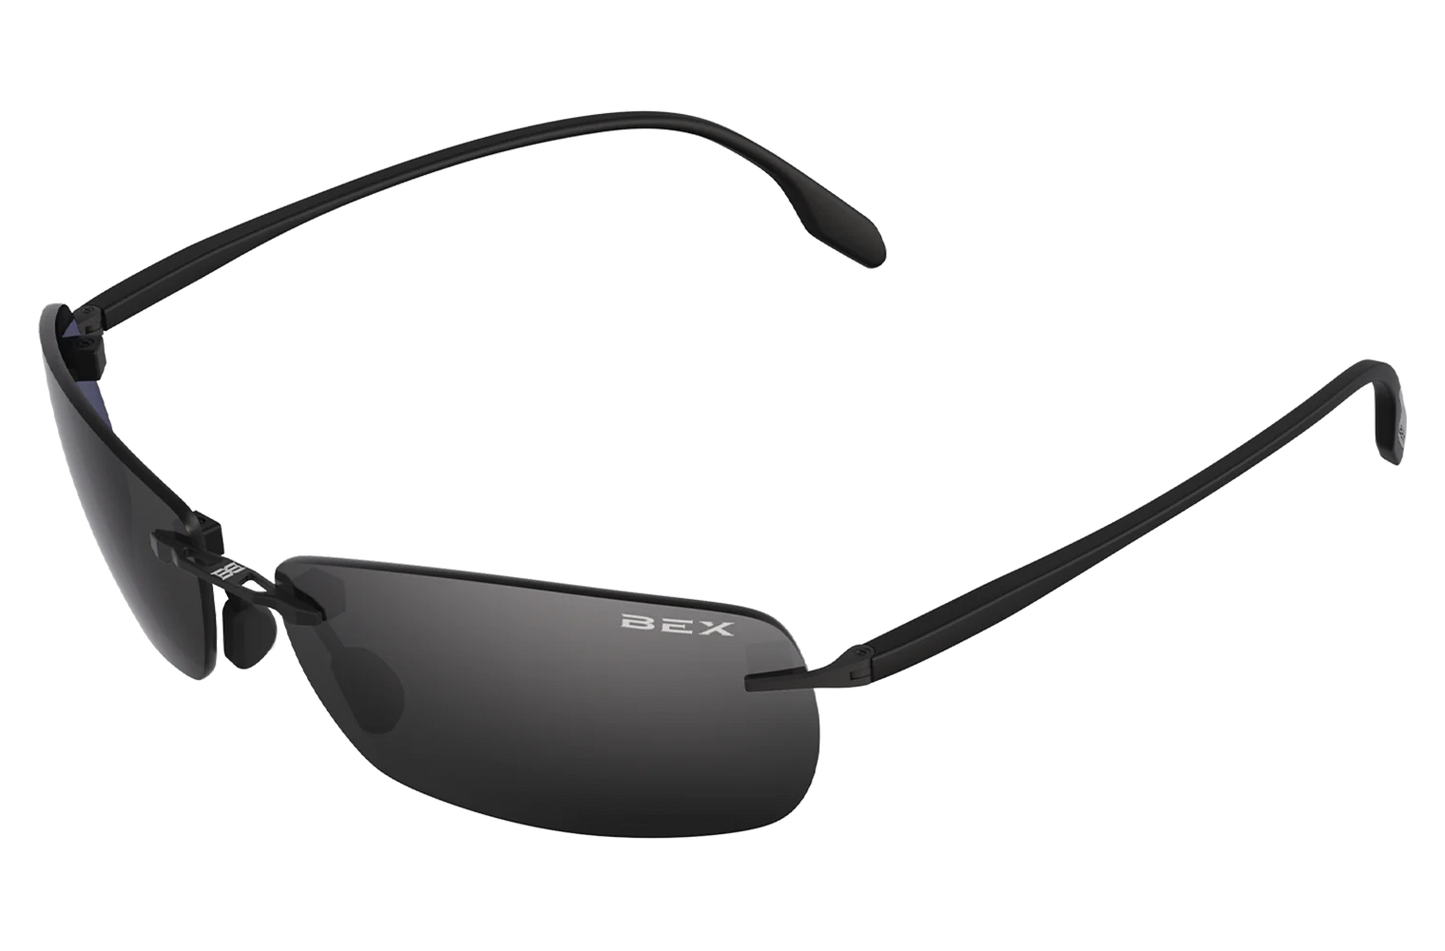 Fynnland XP - BEX Sunglasses